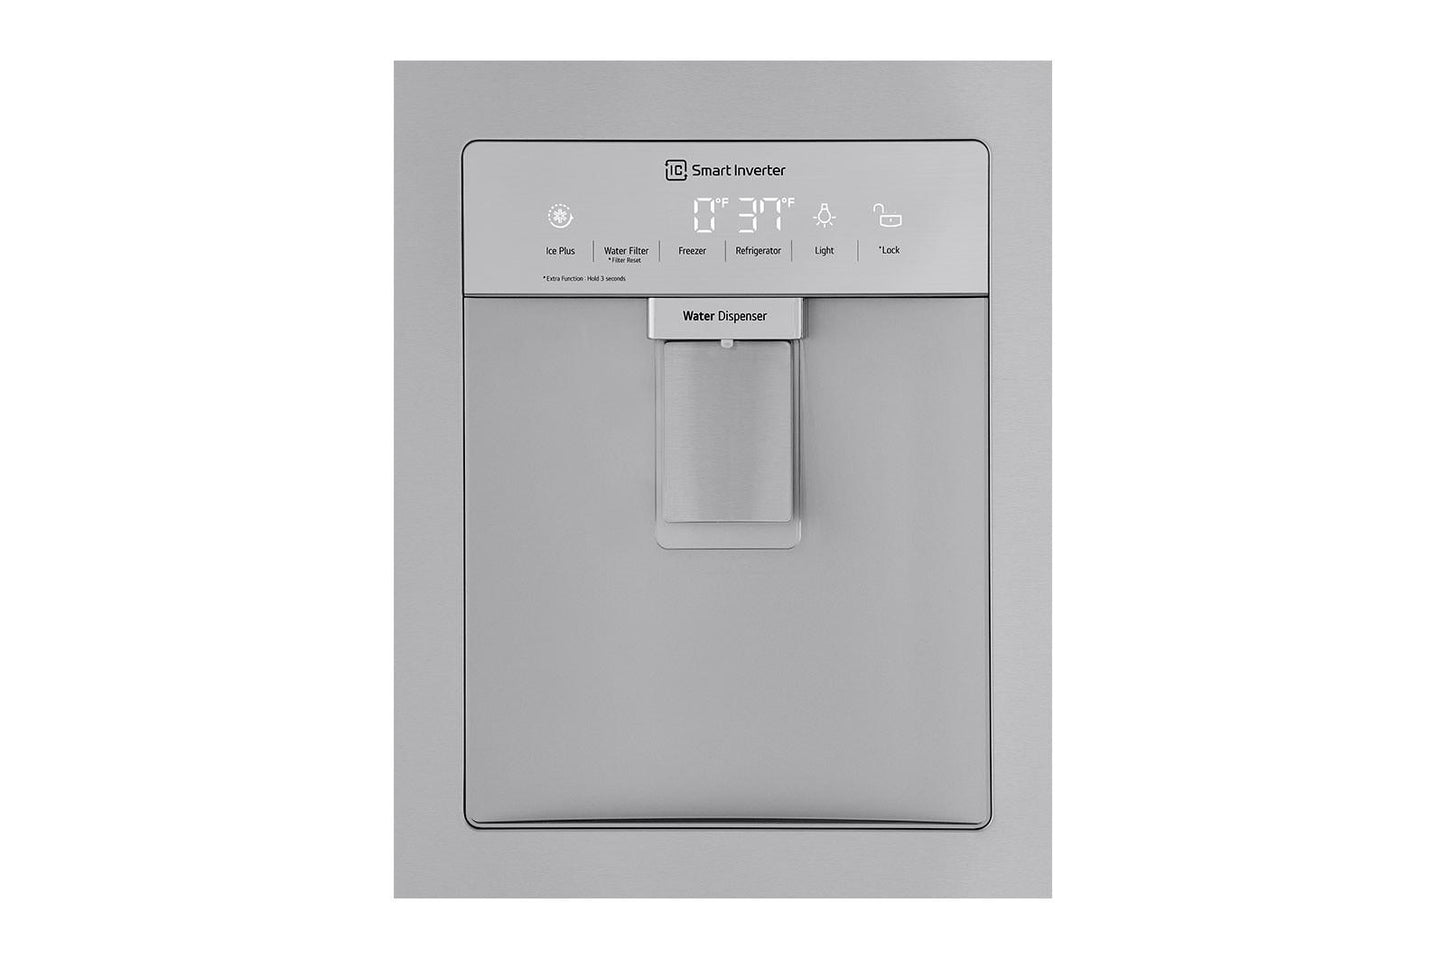 Lg LRMWS2906S 29 Cu. Ft. French Door Refrigerator With Slim Design Water Dispenser